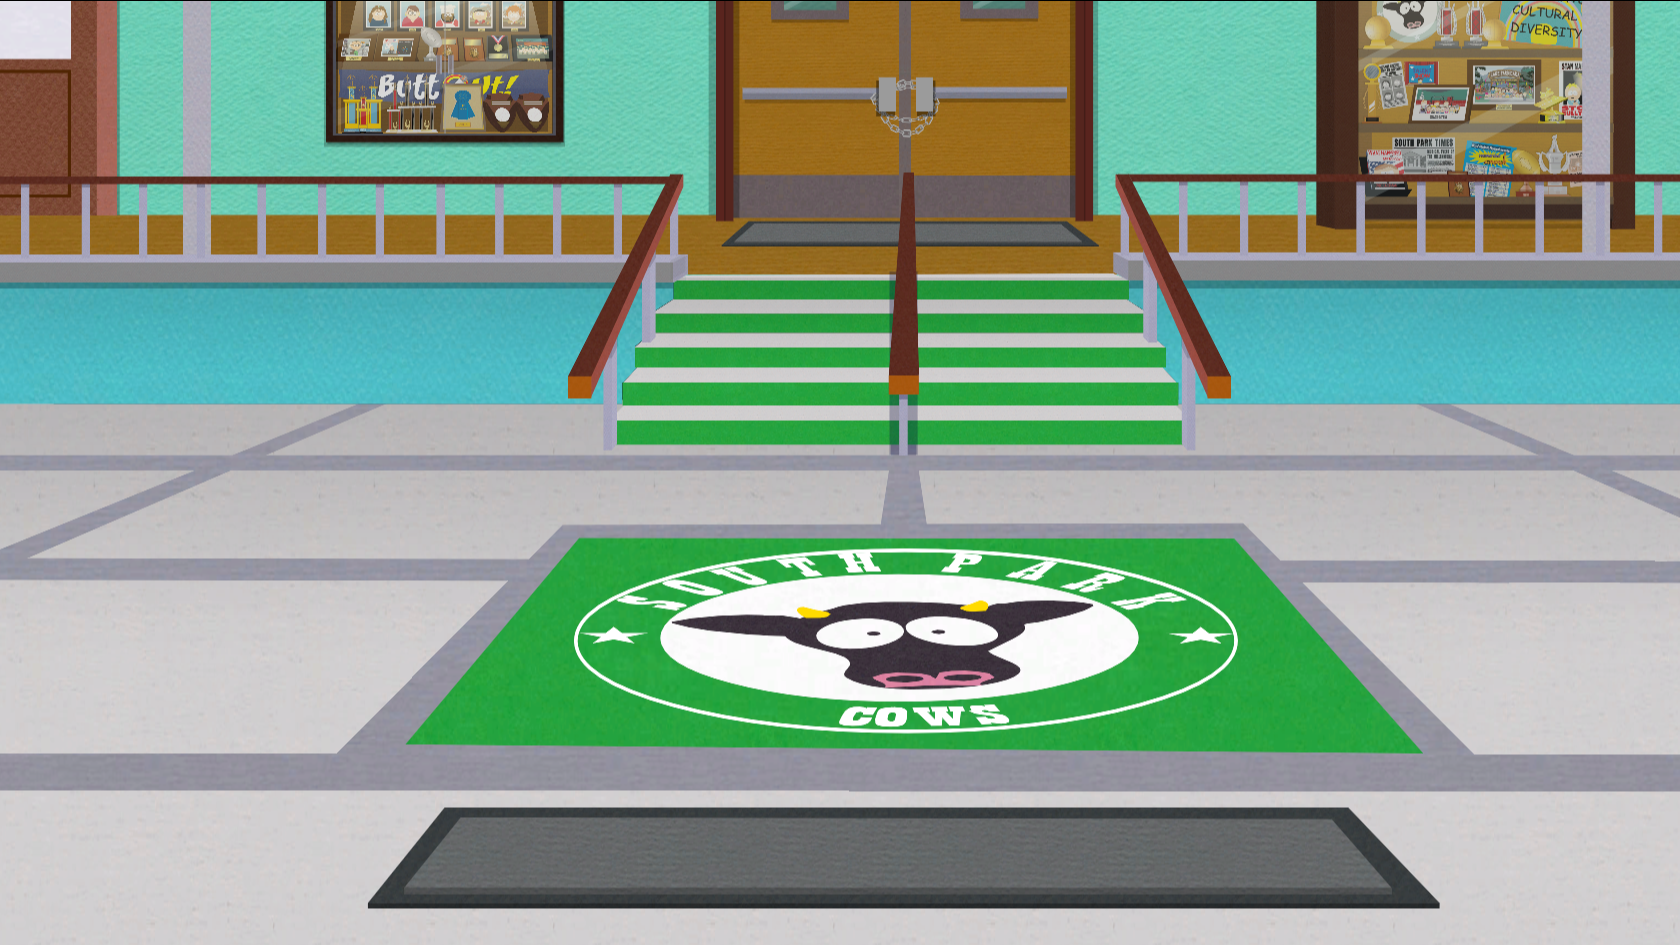 South Park School Lobby (SoT BG) by RoamingBerry on DeviantArt